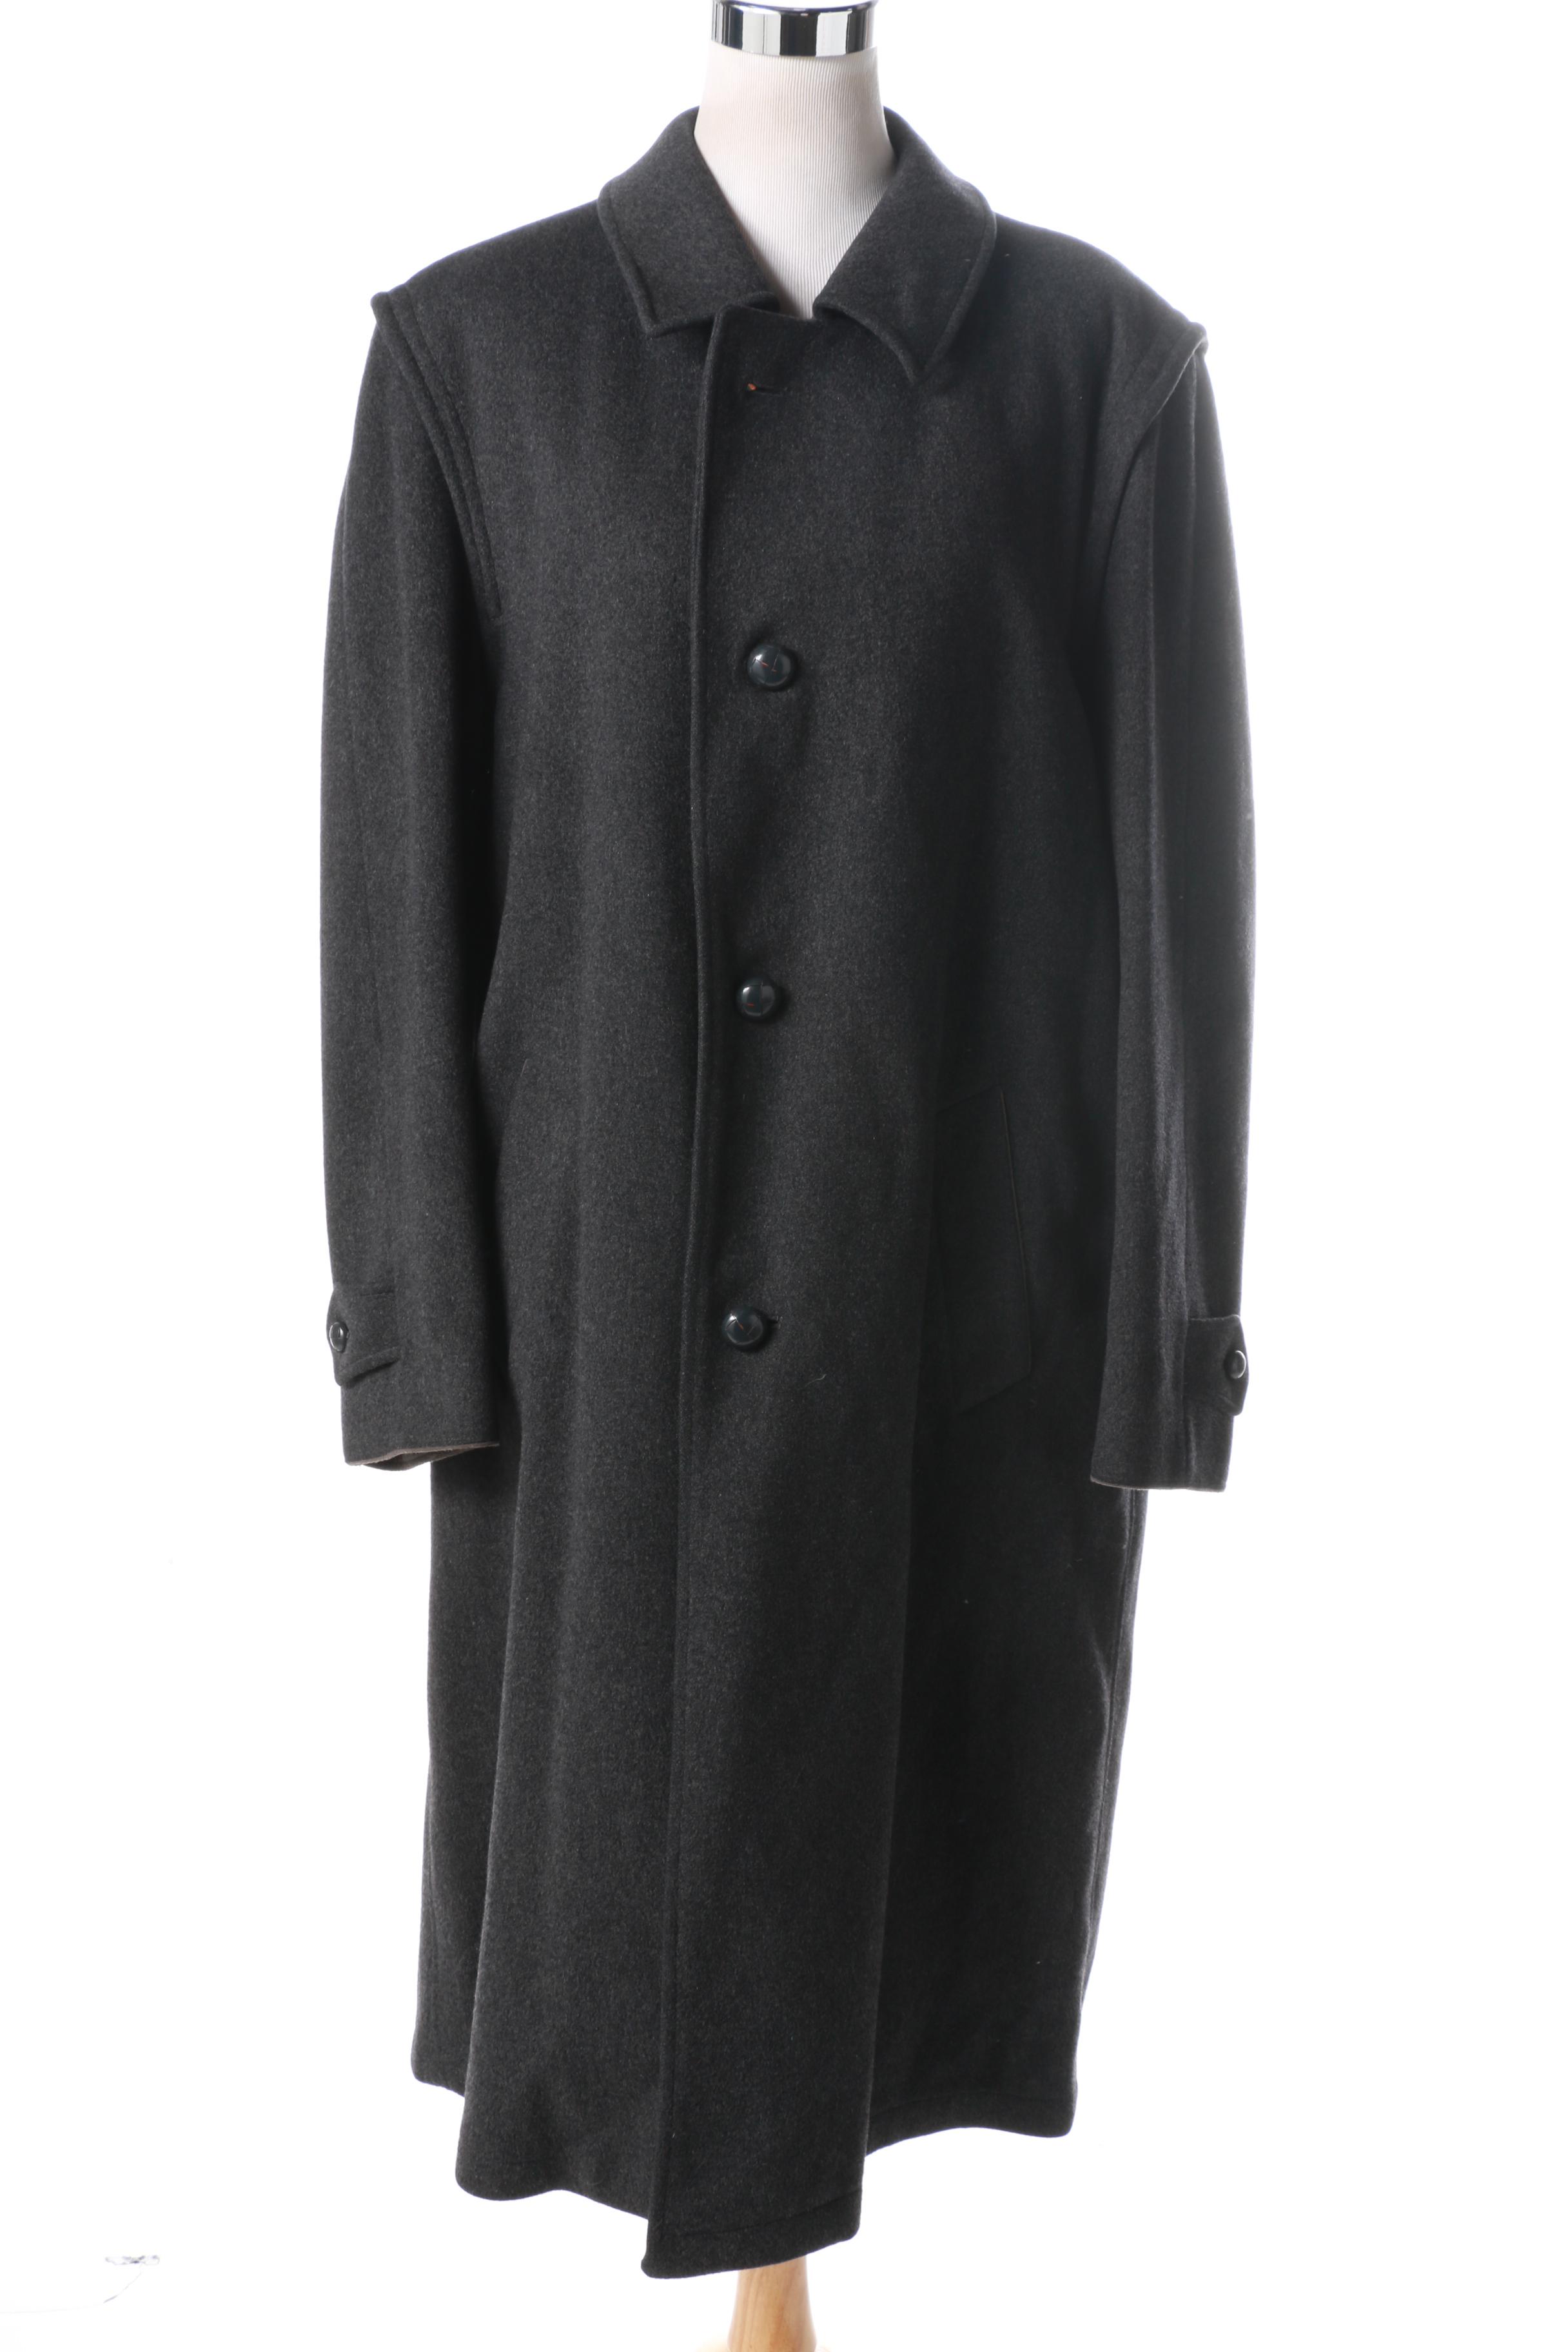 burberry loden coat